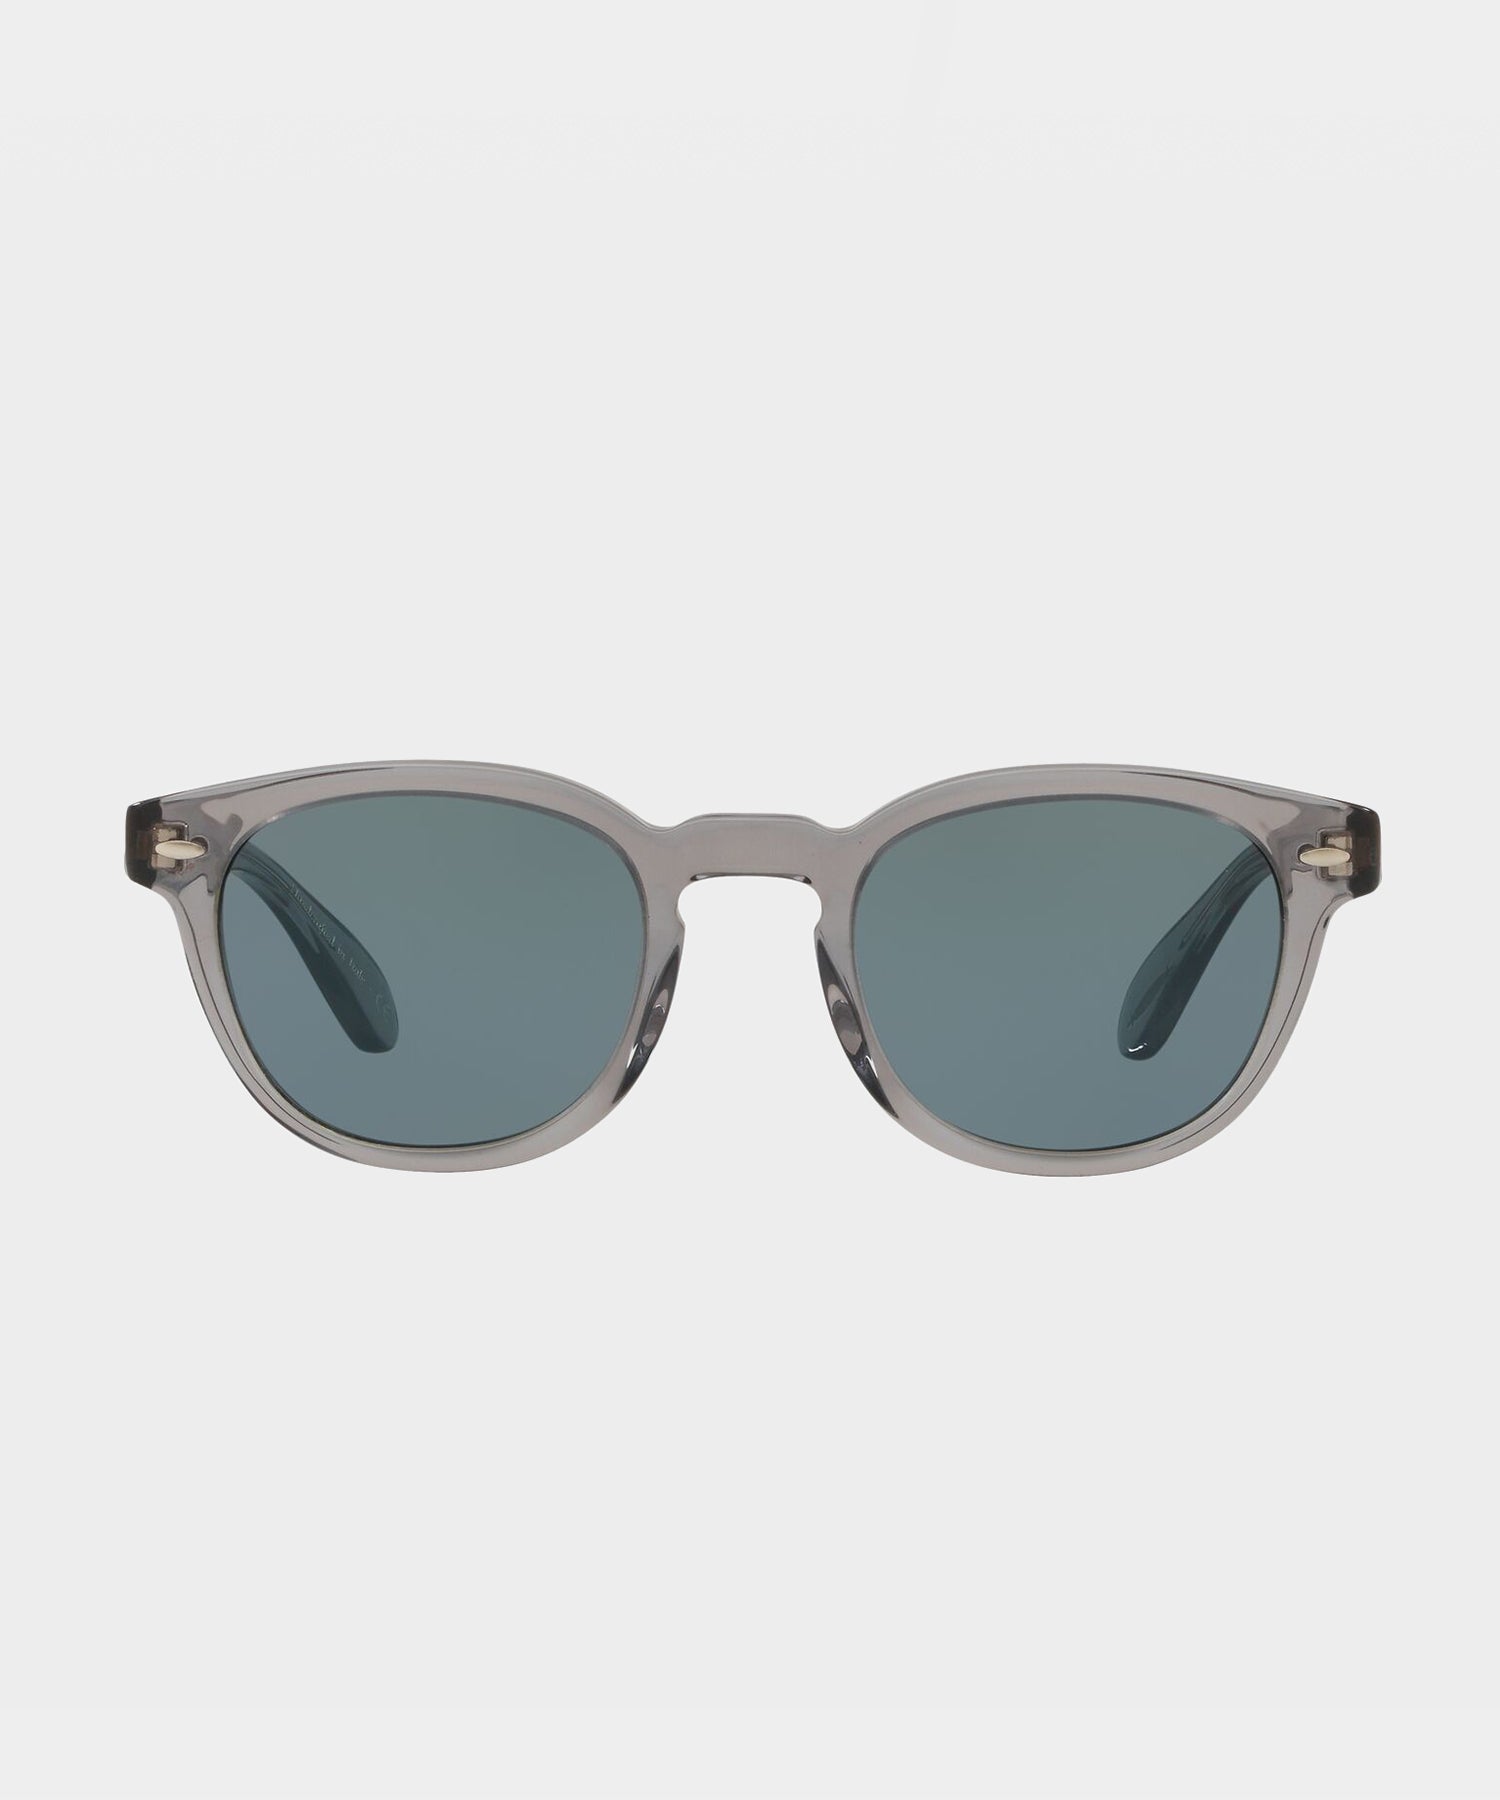 Oliver Peoples Sheldrake Sunglasses in Workman Grey